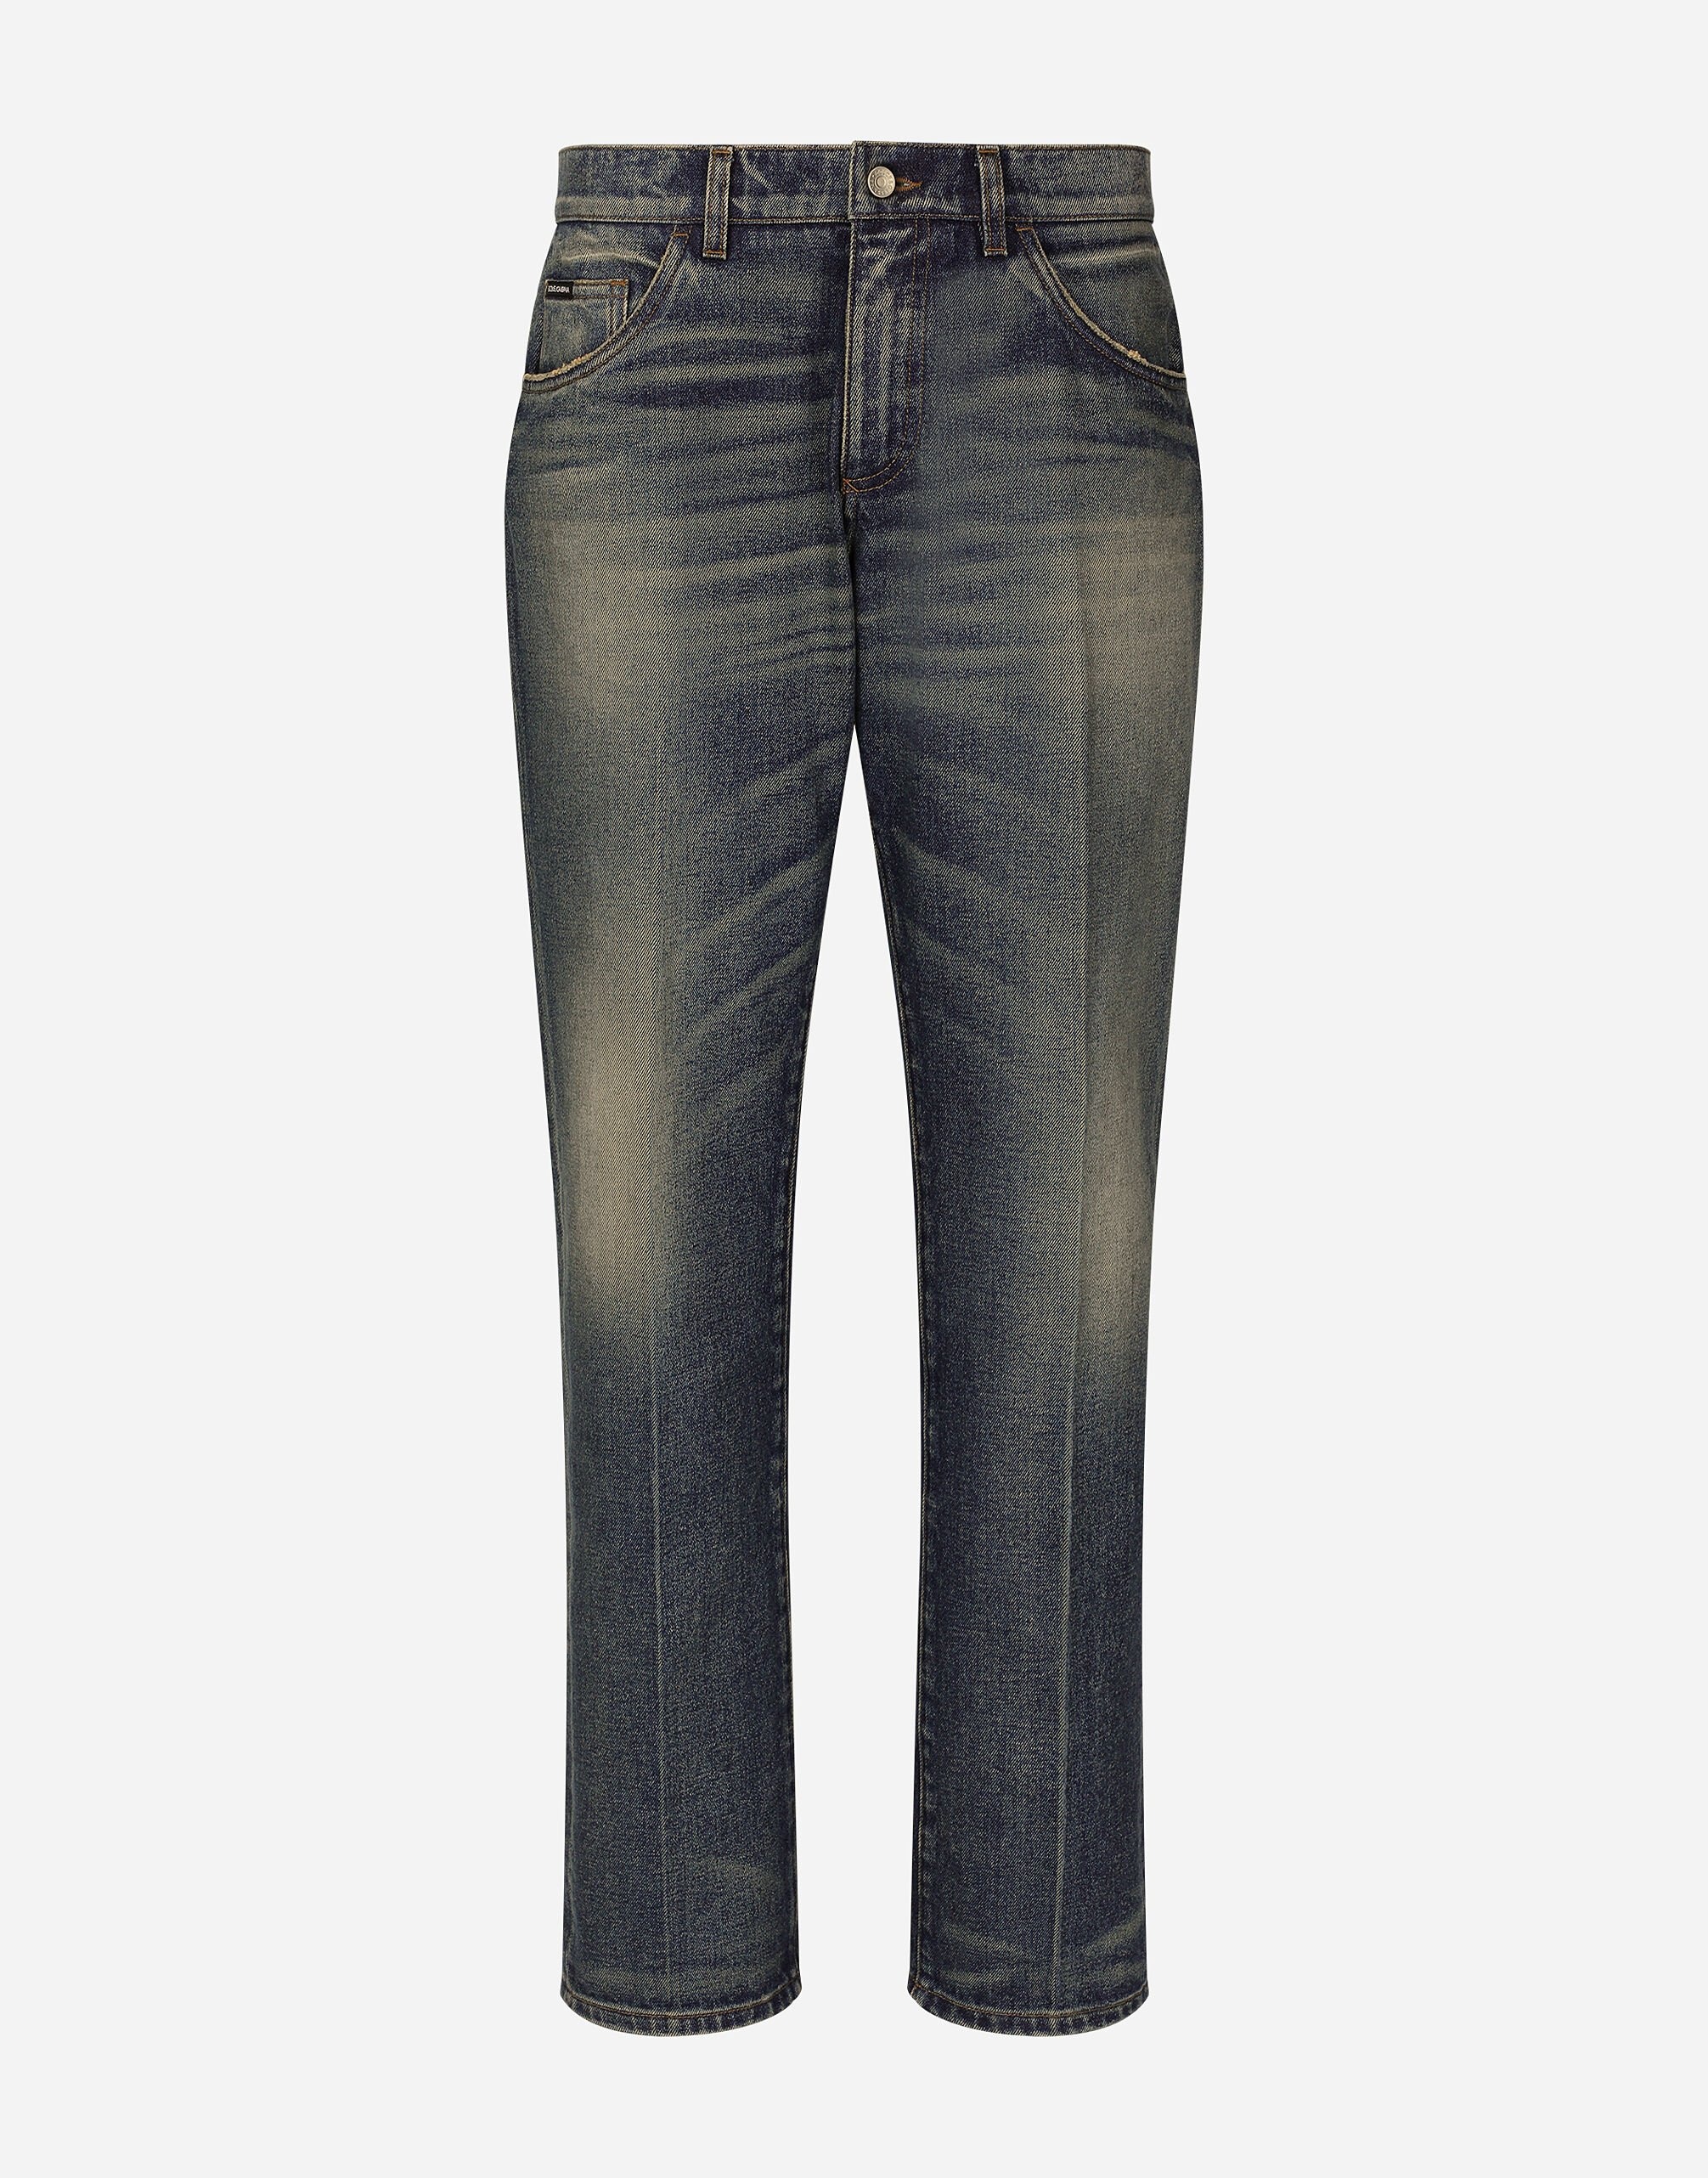 Classic blue denim jeans - 1